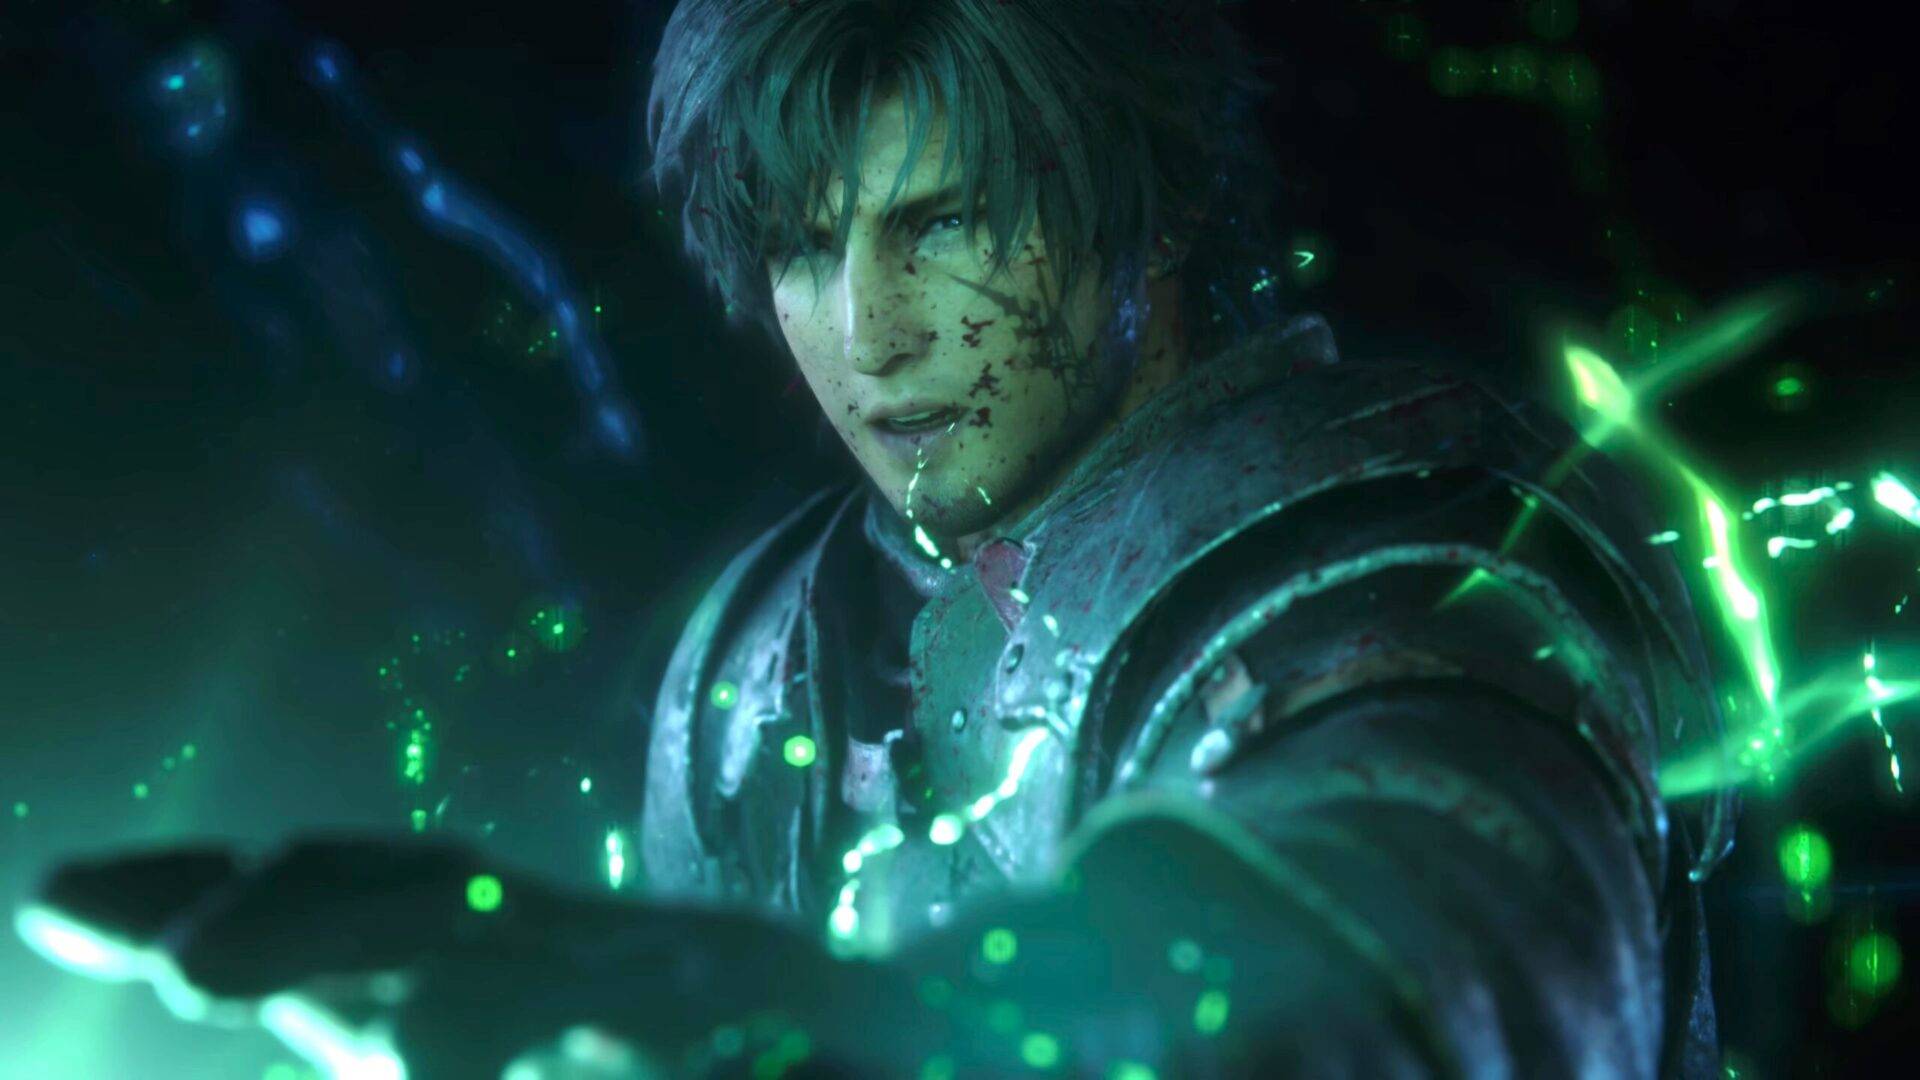 《Final Fantasy XVI》制作人证实团队会在PS5版推出后全力开发PC版本-电脑王阿达